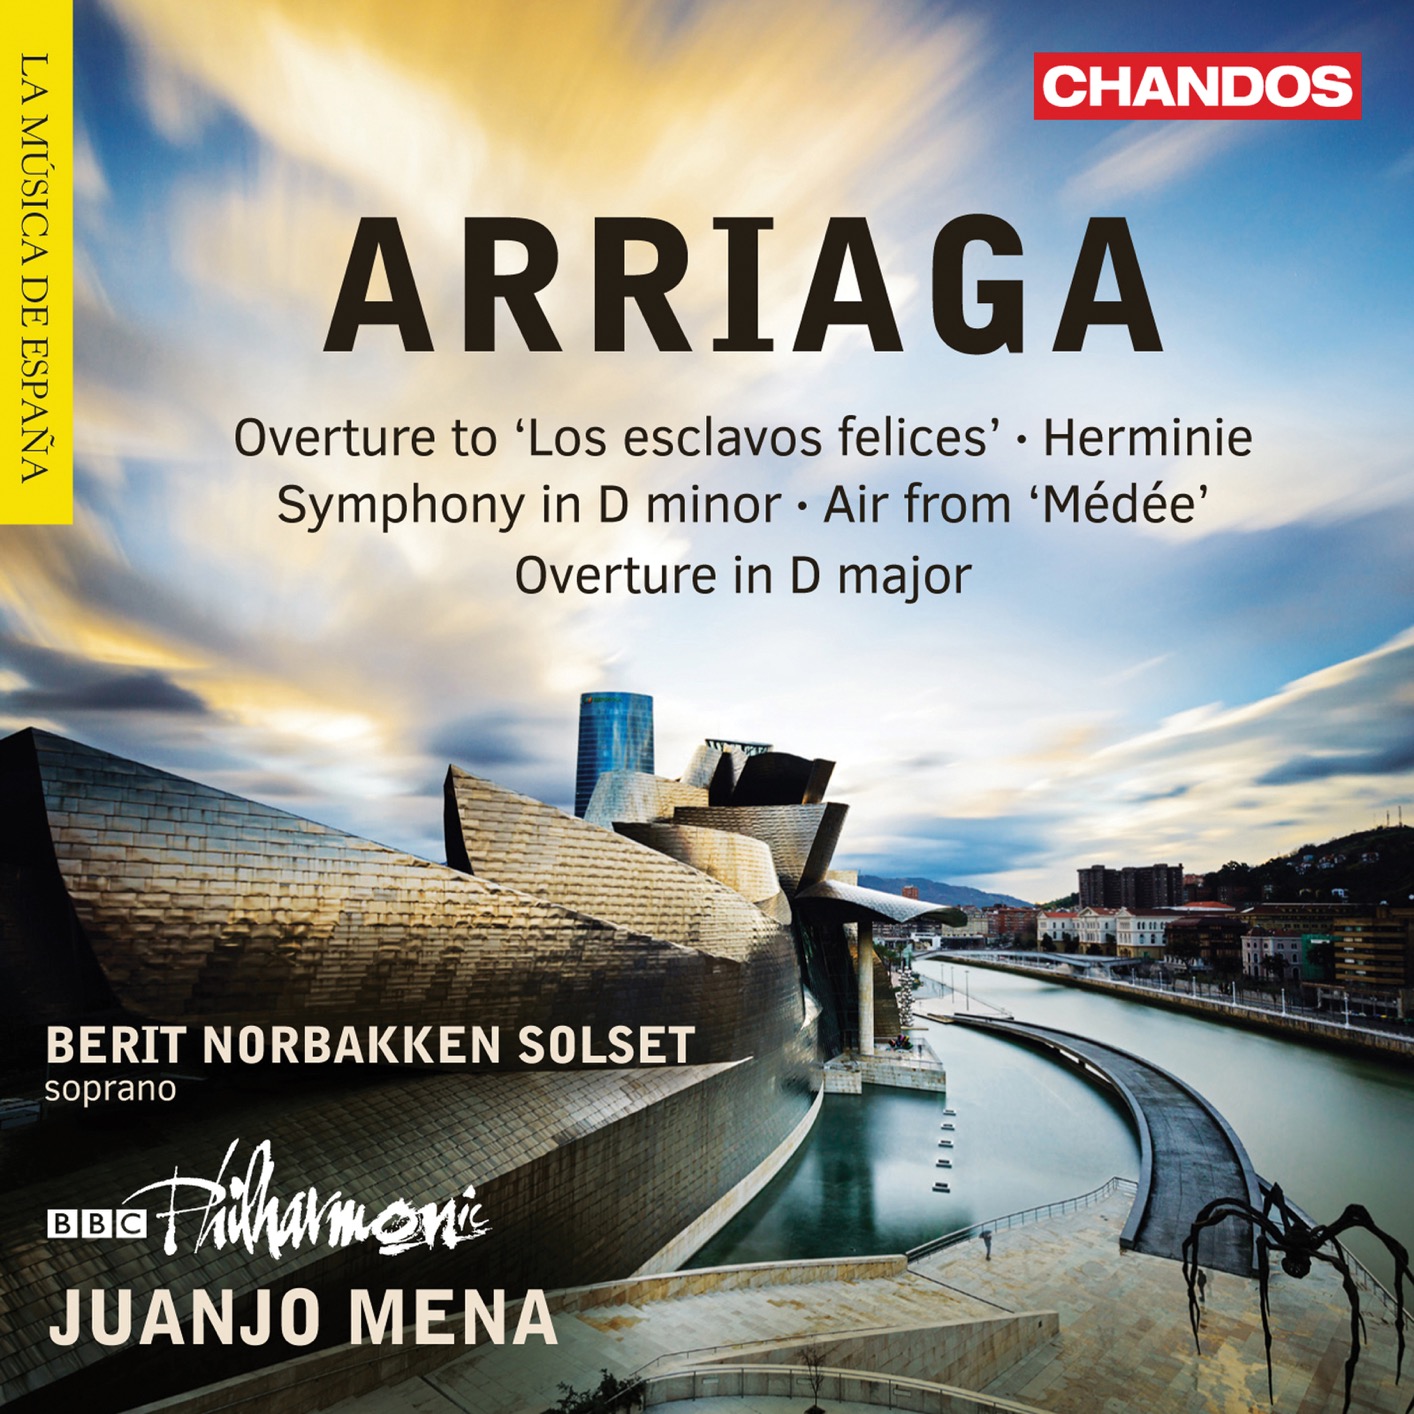 Berit Norbakken Solset, BBC Philharmonic & Juanjo Mena – Arriaga: Overtures, Herminie & Other Works (2019) [FLAC 24bit/96kHz]